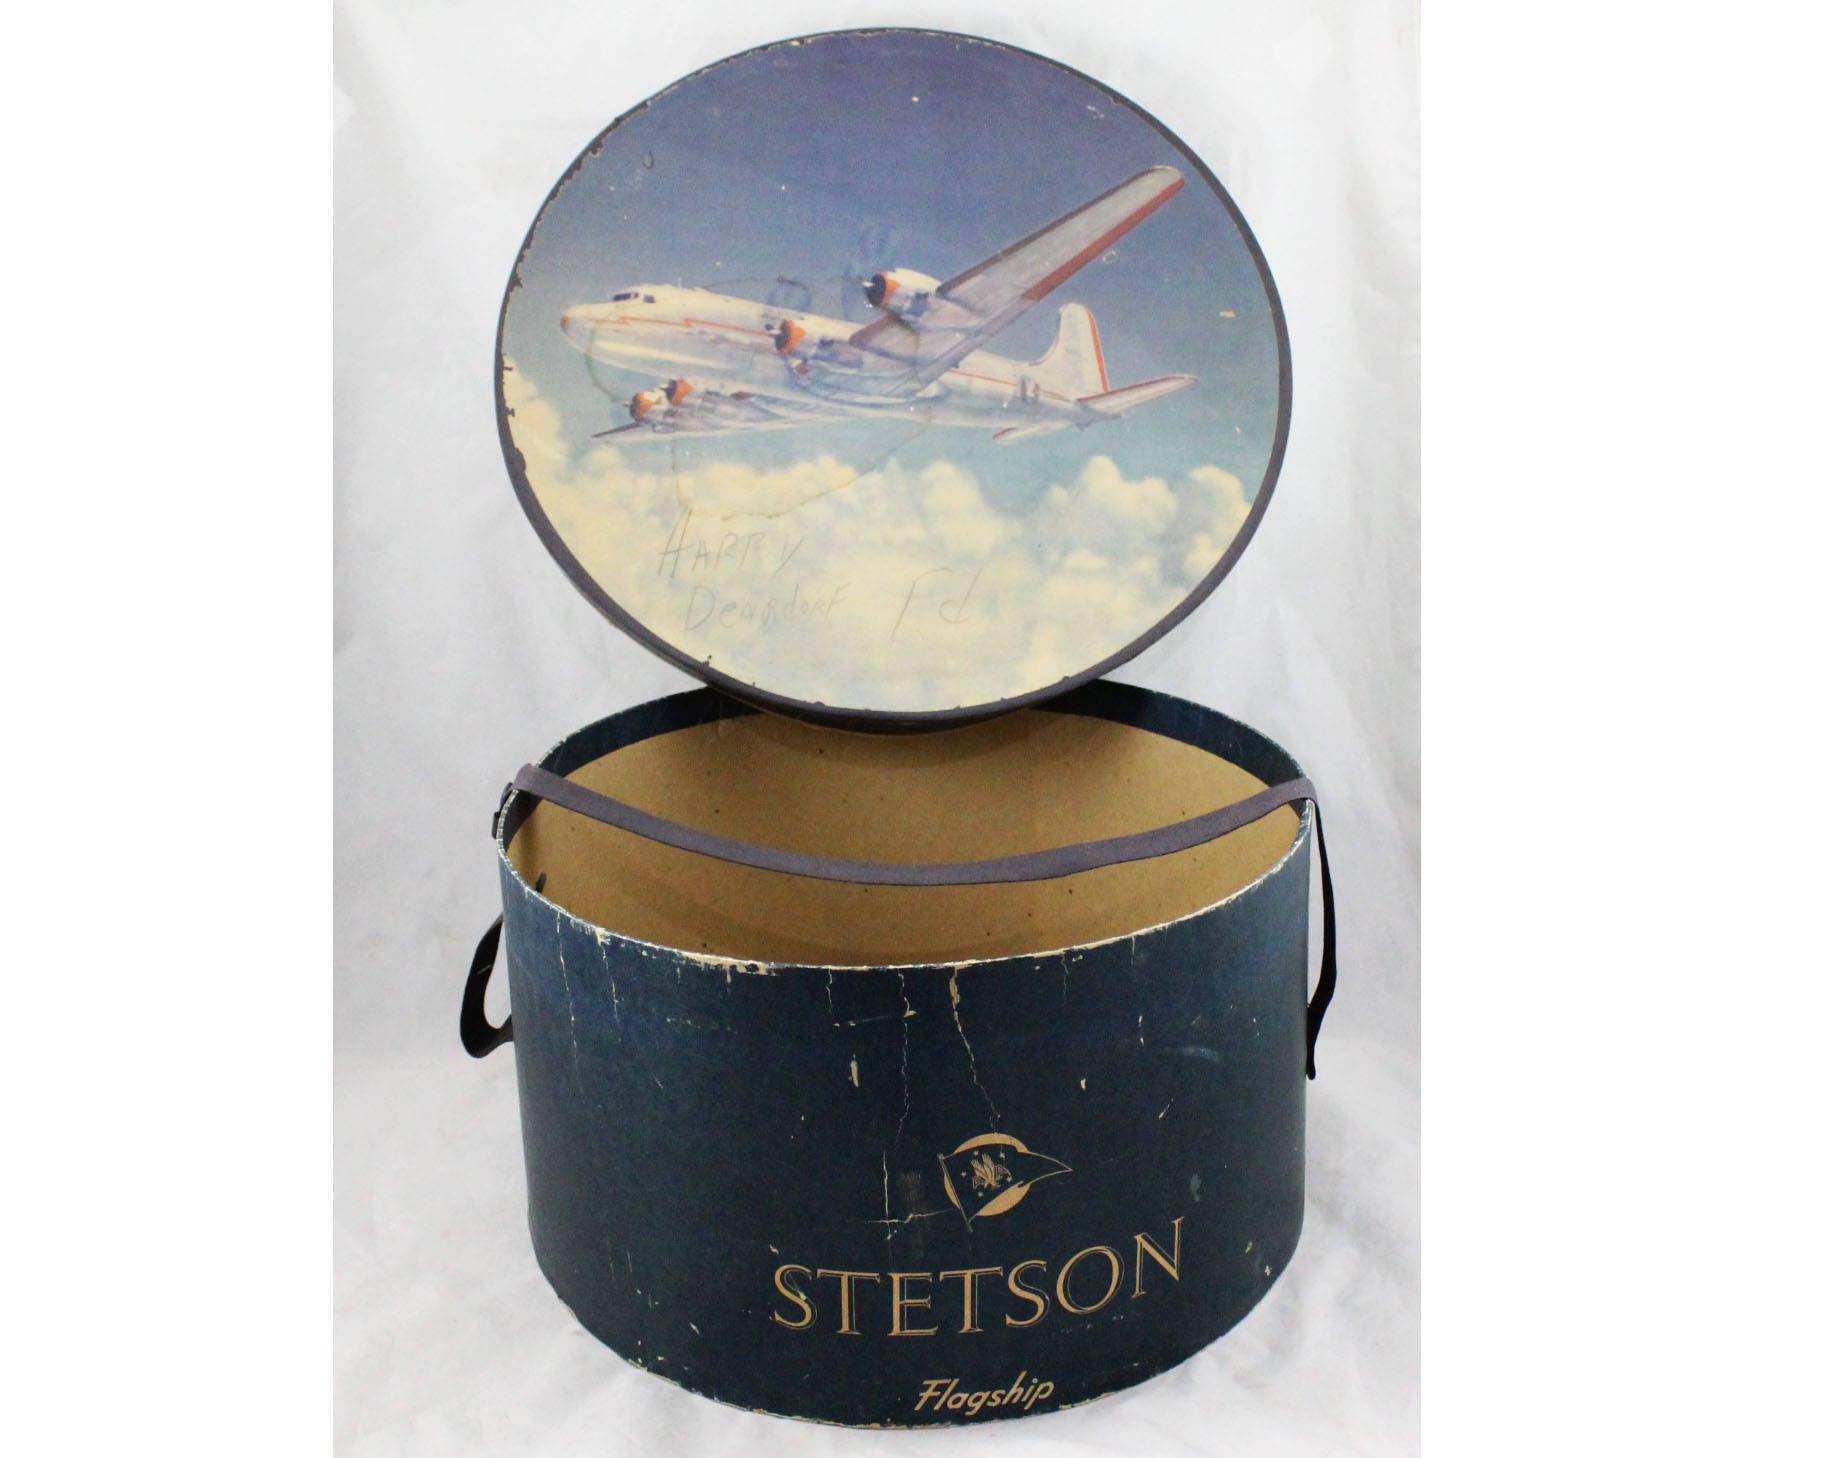 Stetson Airplane Hat Box - 1940s Men's Stetson Flagship Blue